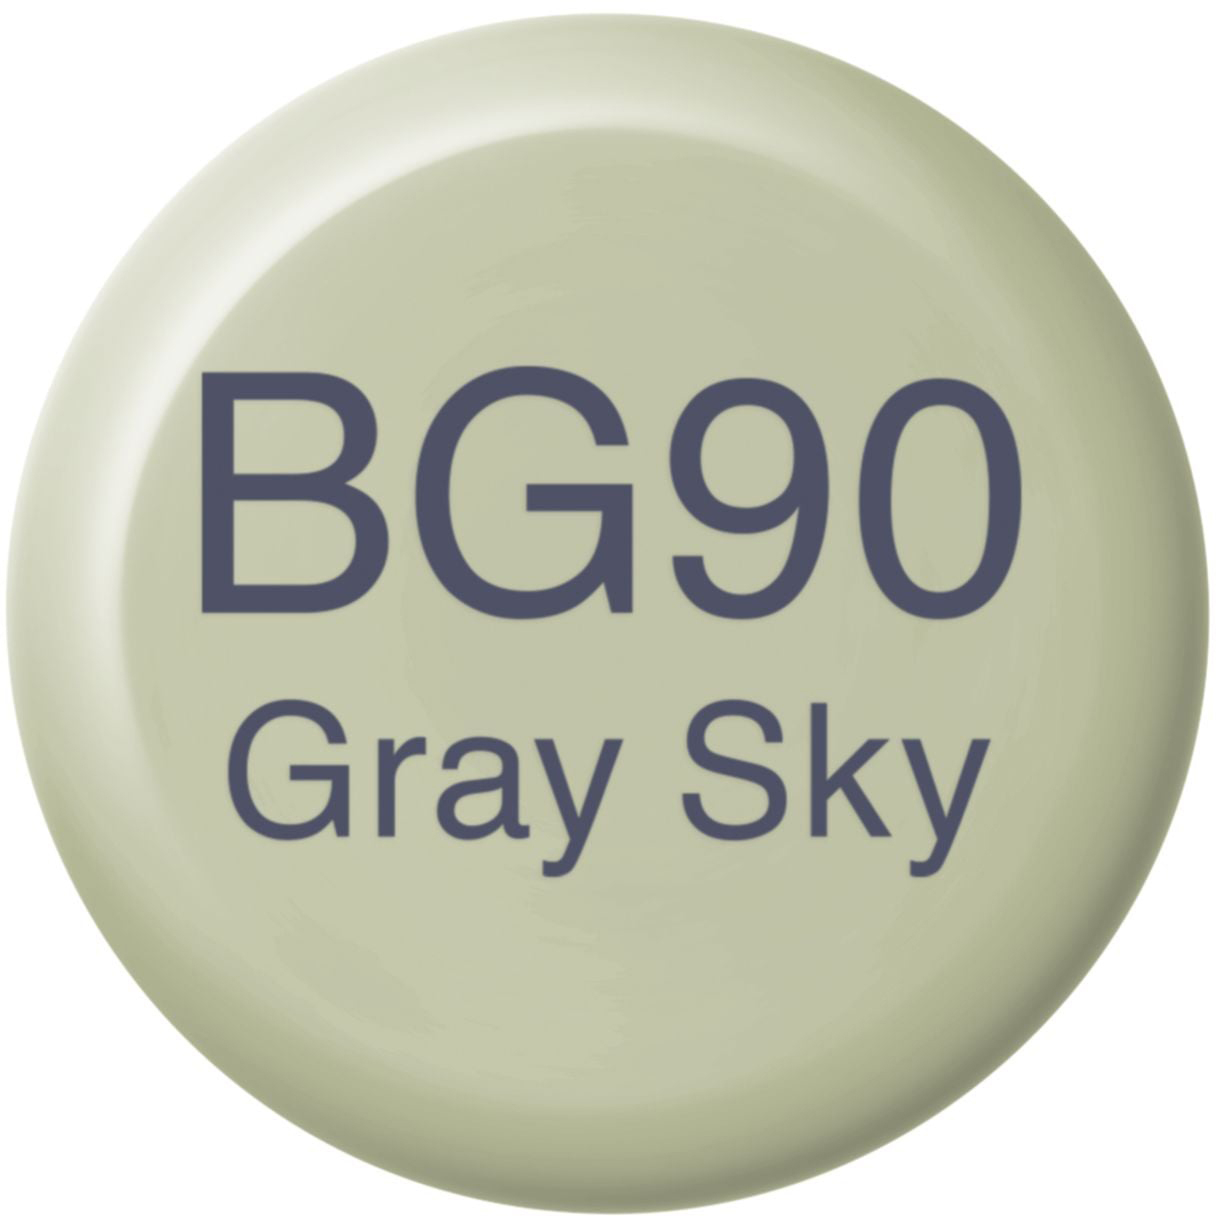 COPIC Ink Refill 21076373 BG90 - Grey Sky